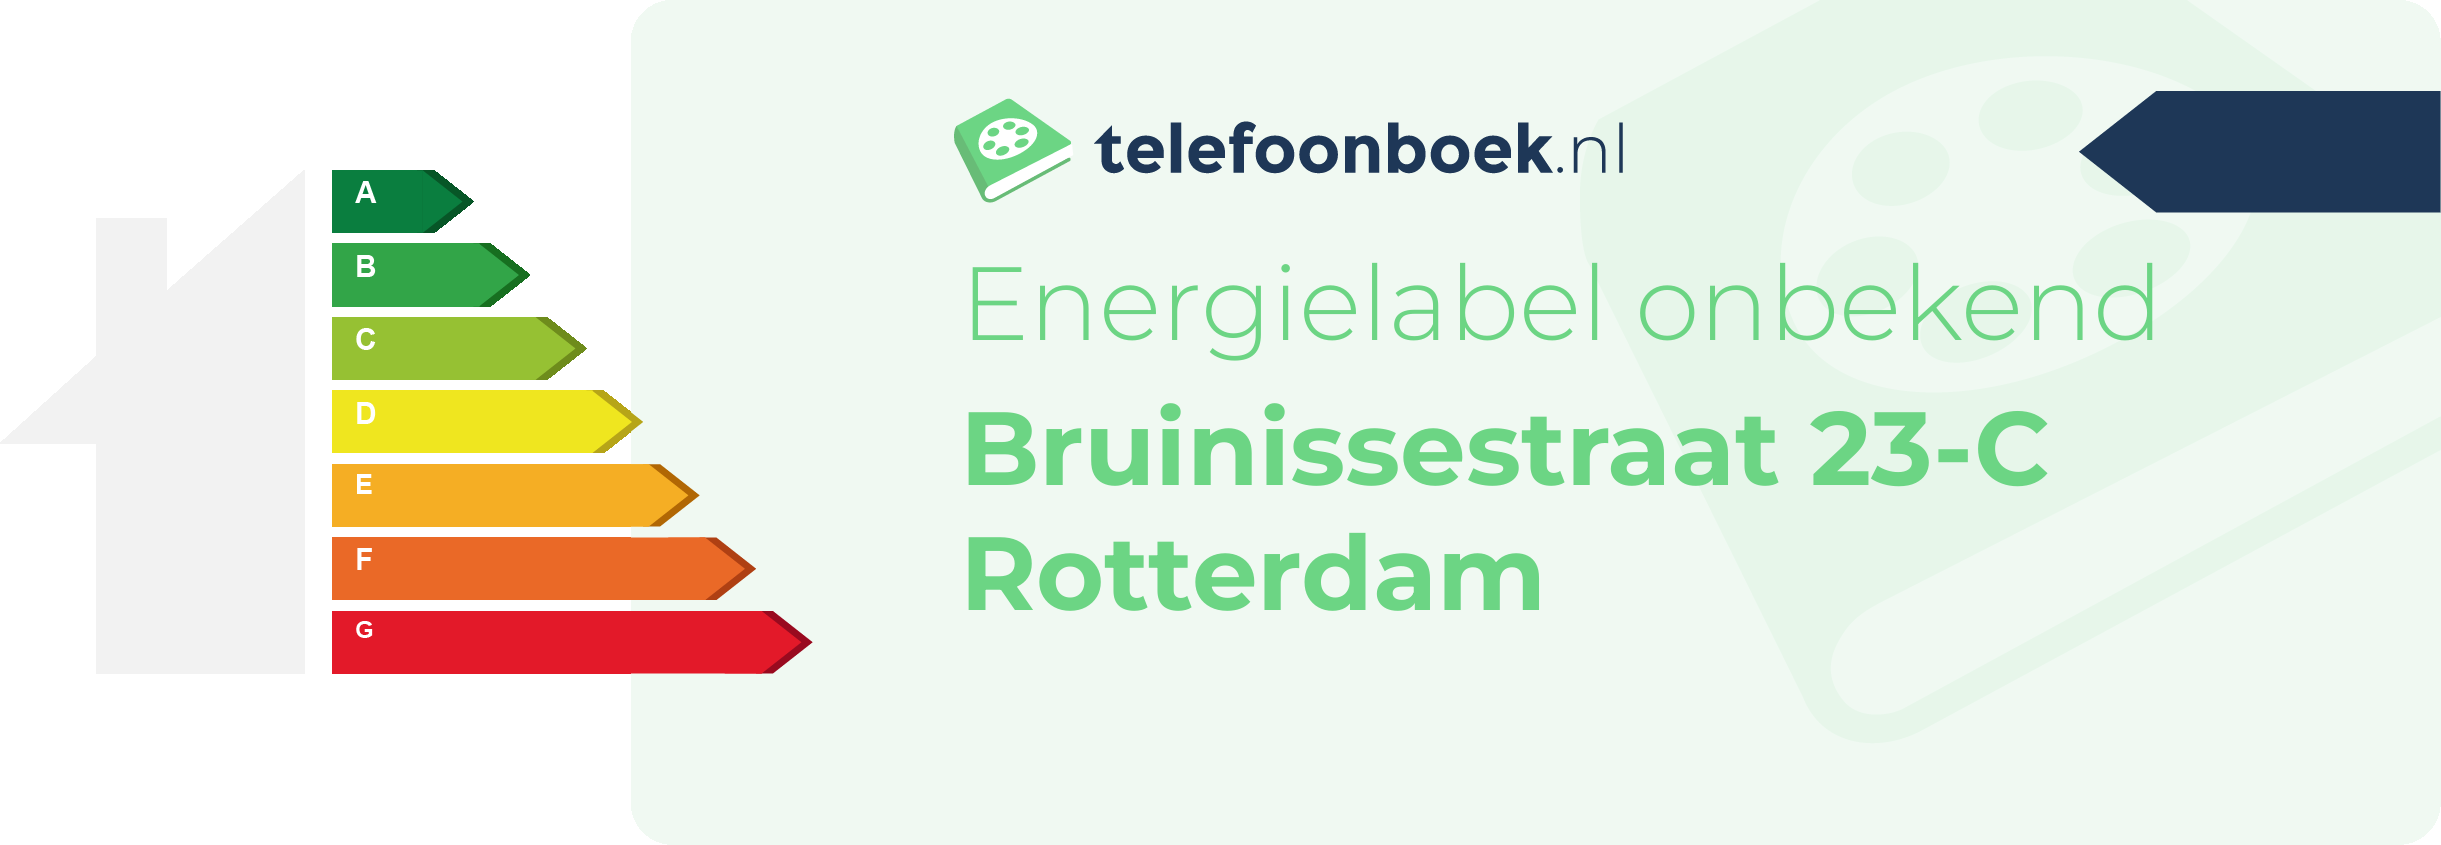 Energielabel Bruinissestraat 23-C Rotterdam